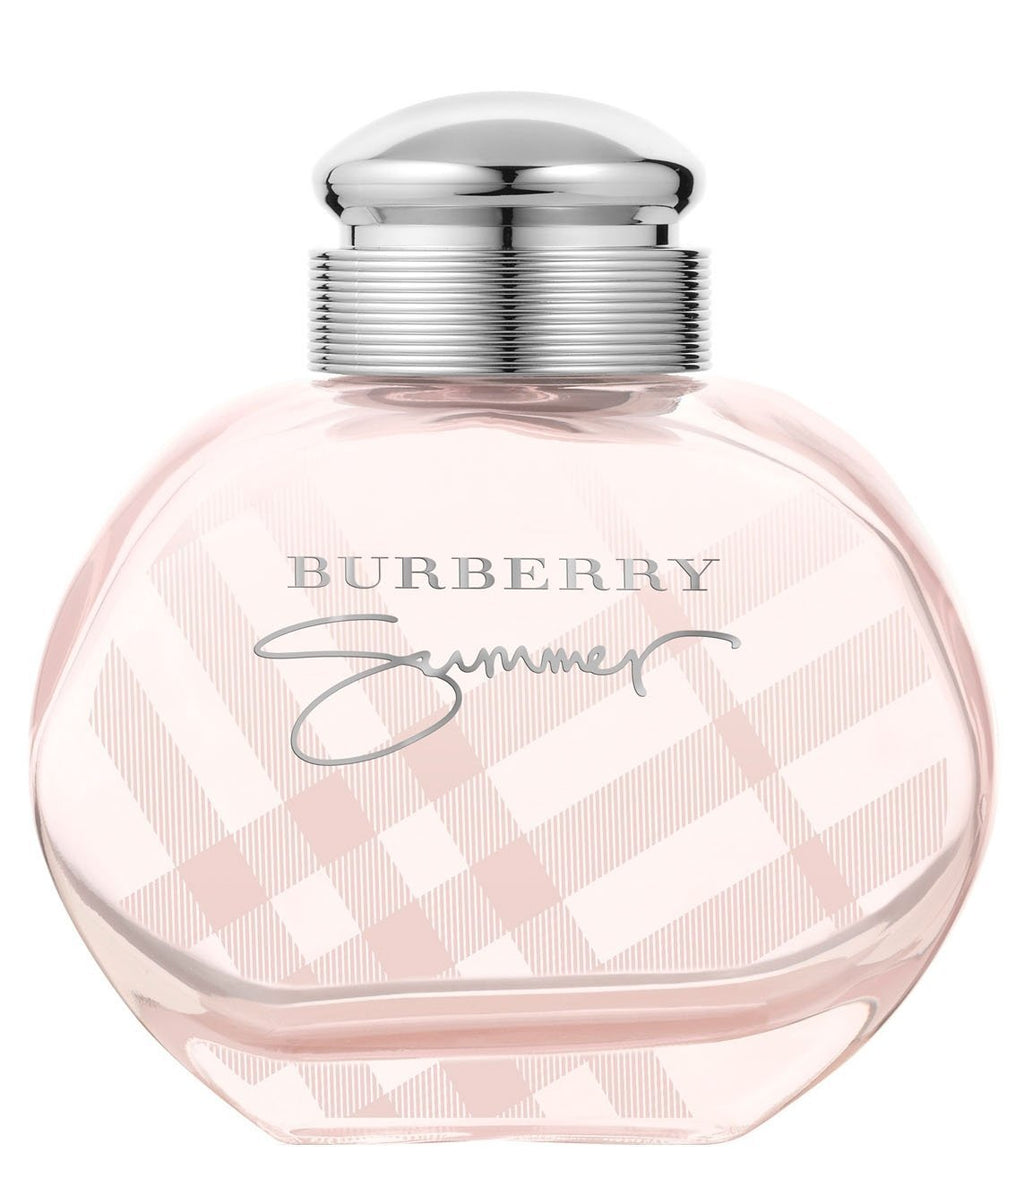 burberry summer perfume spray 100 ml